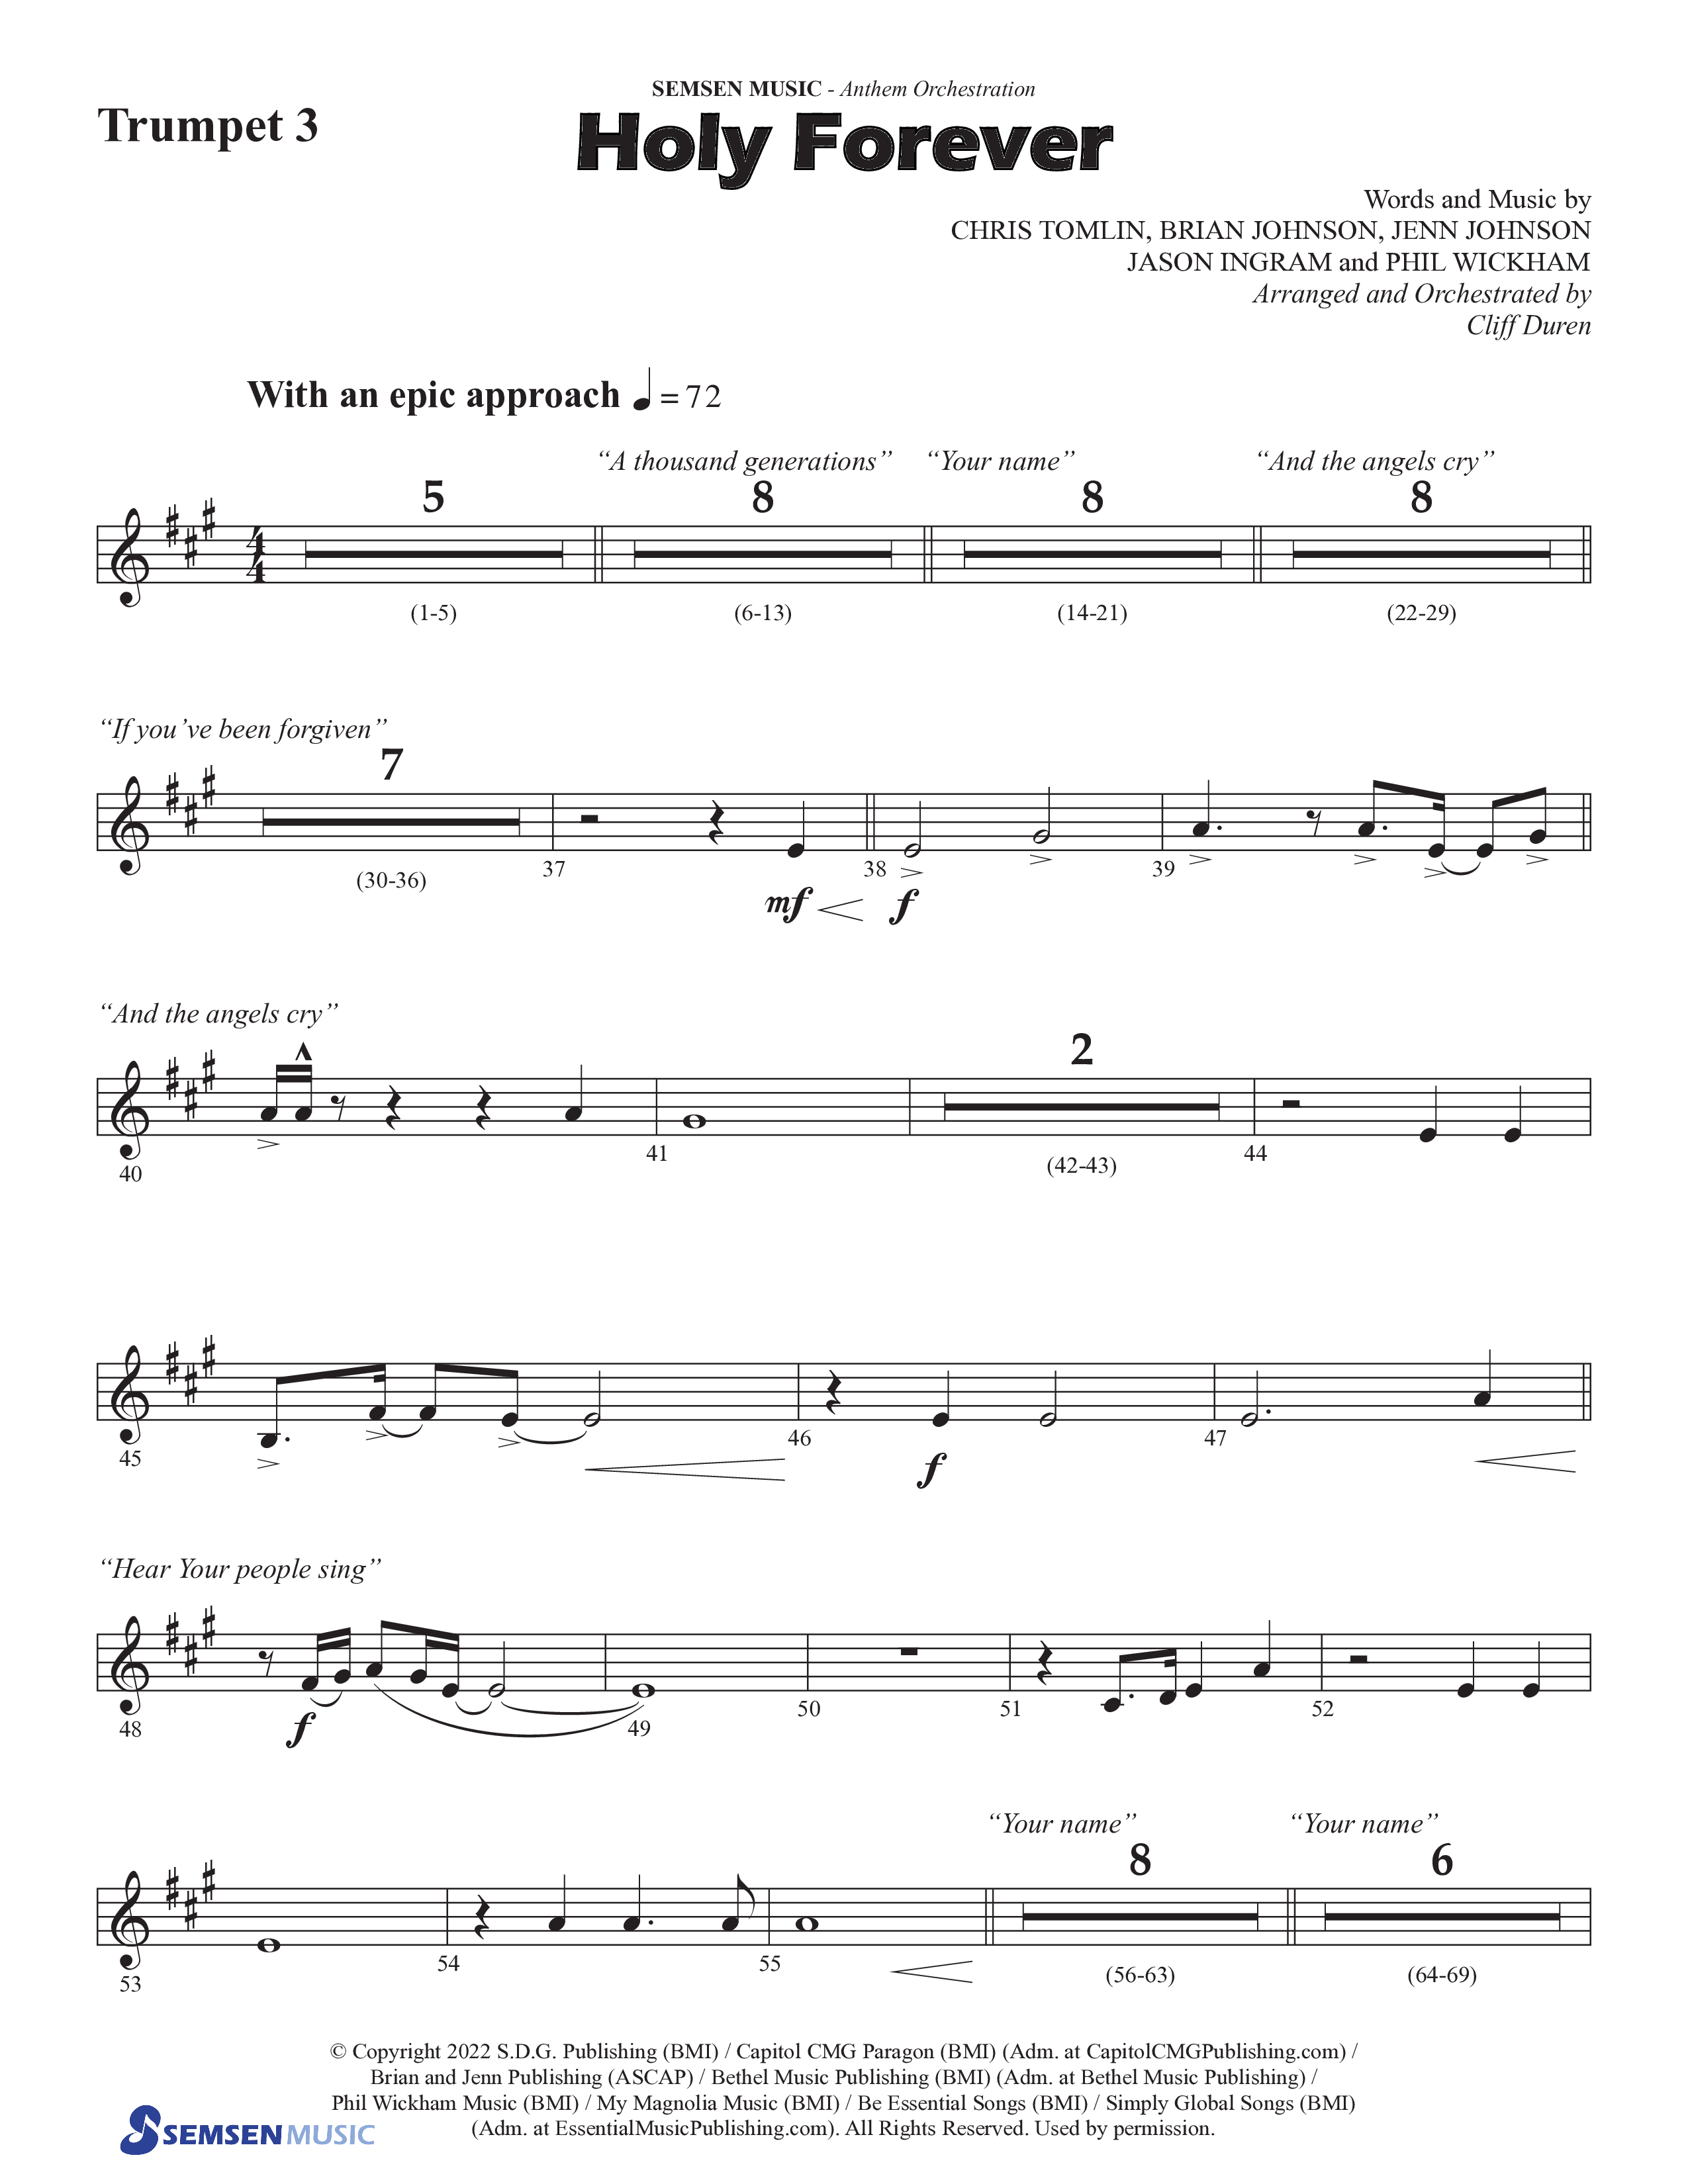 Holy Forever (Choral Anthem SATB) Trumpet 3 (Semsen Music / Arr. Cliff Duren)